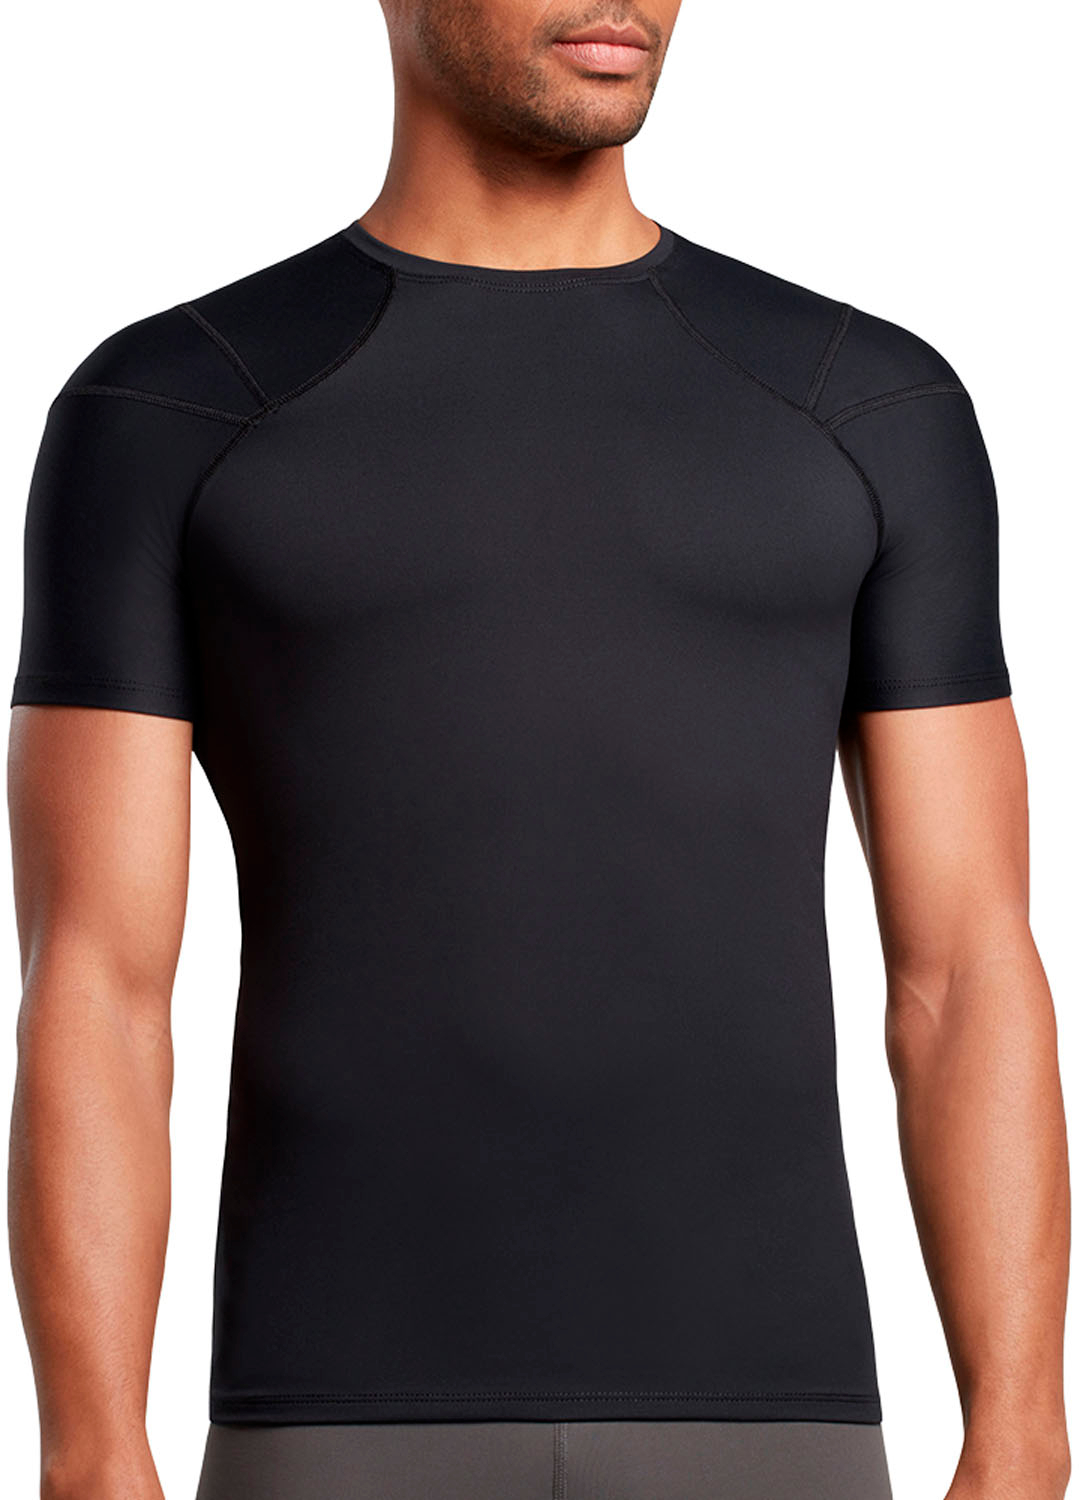 Tommie Copper Men's Compression Short Sleeve Shirt